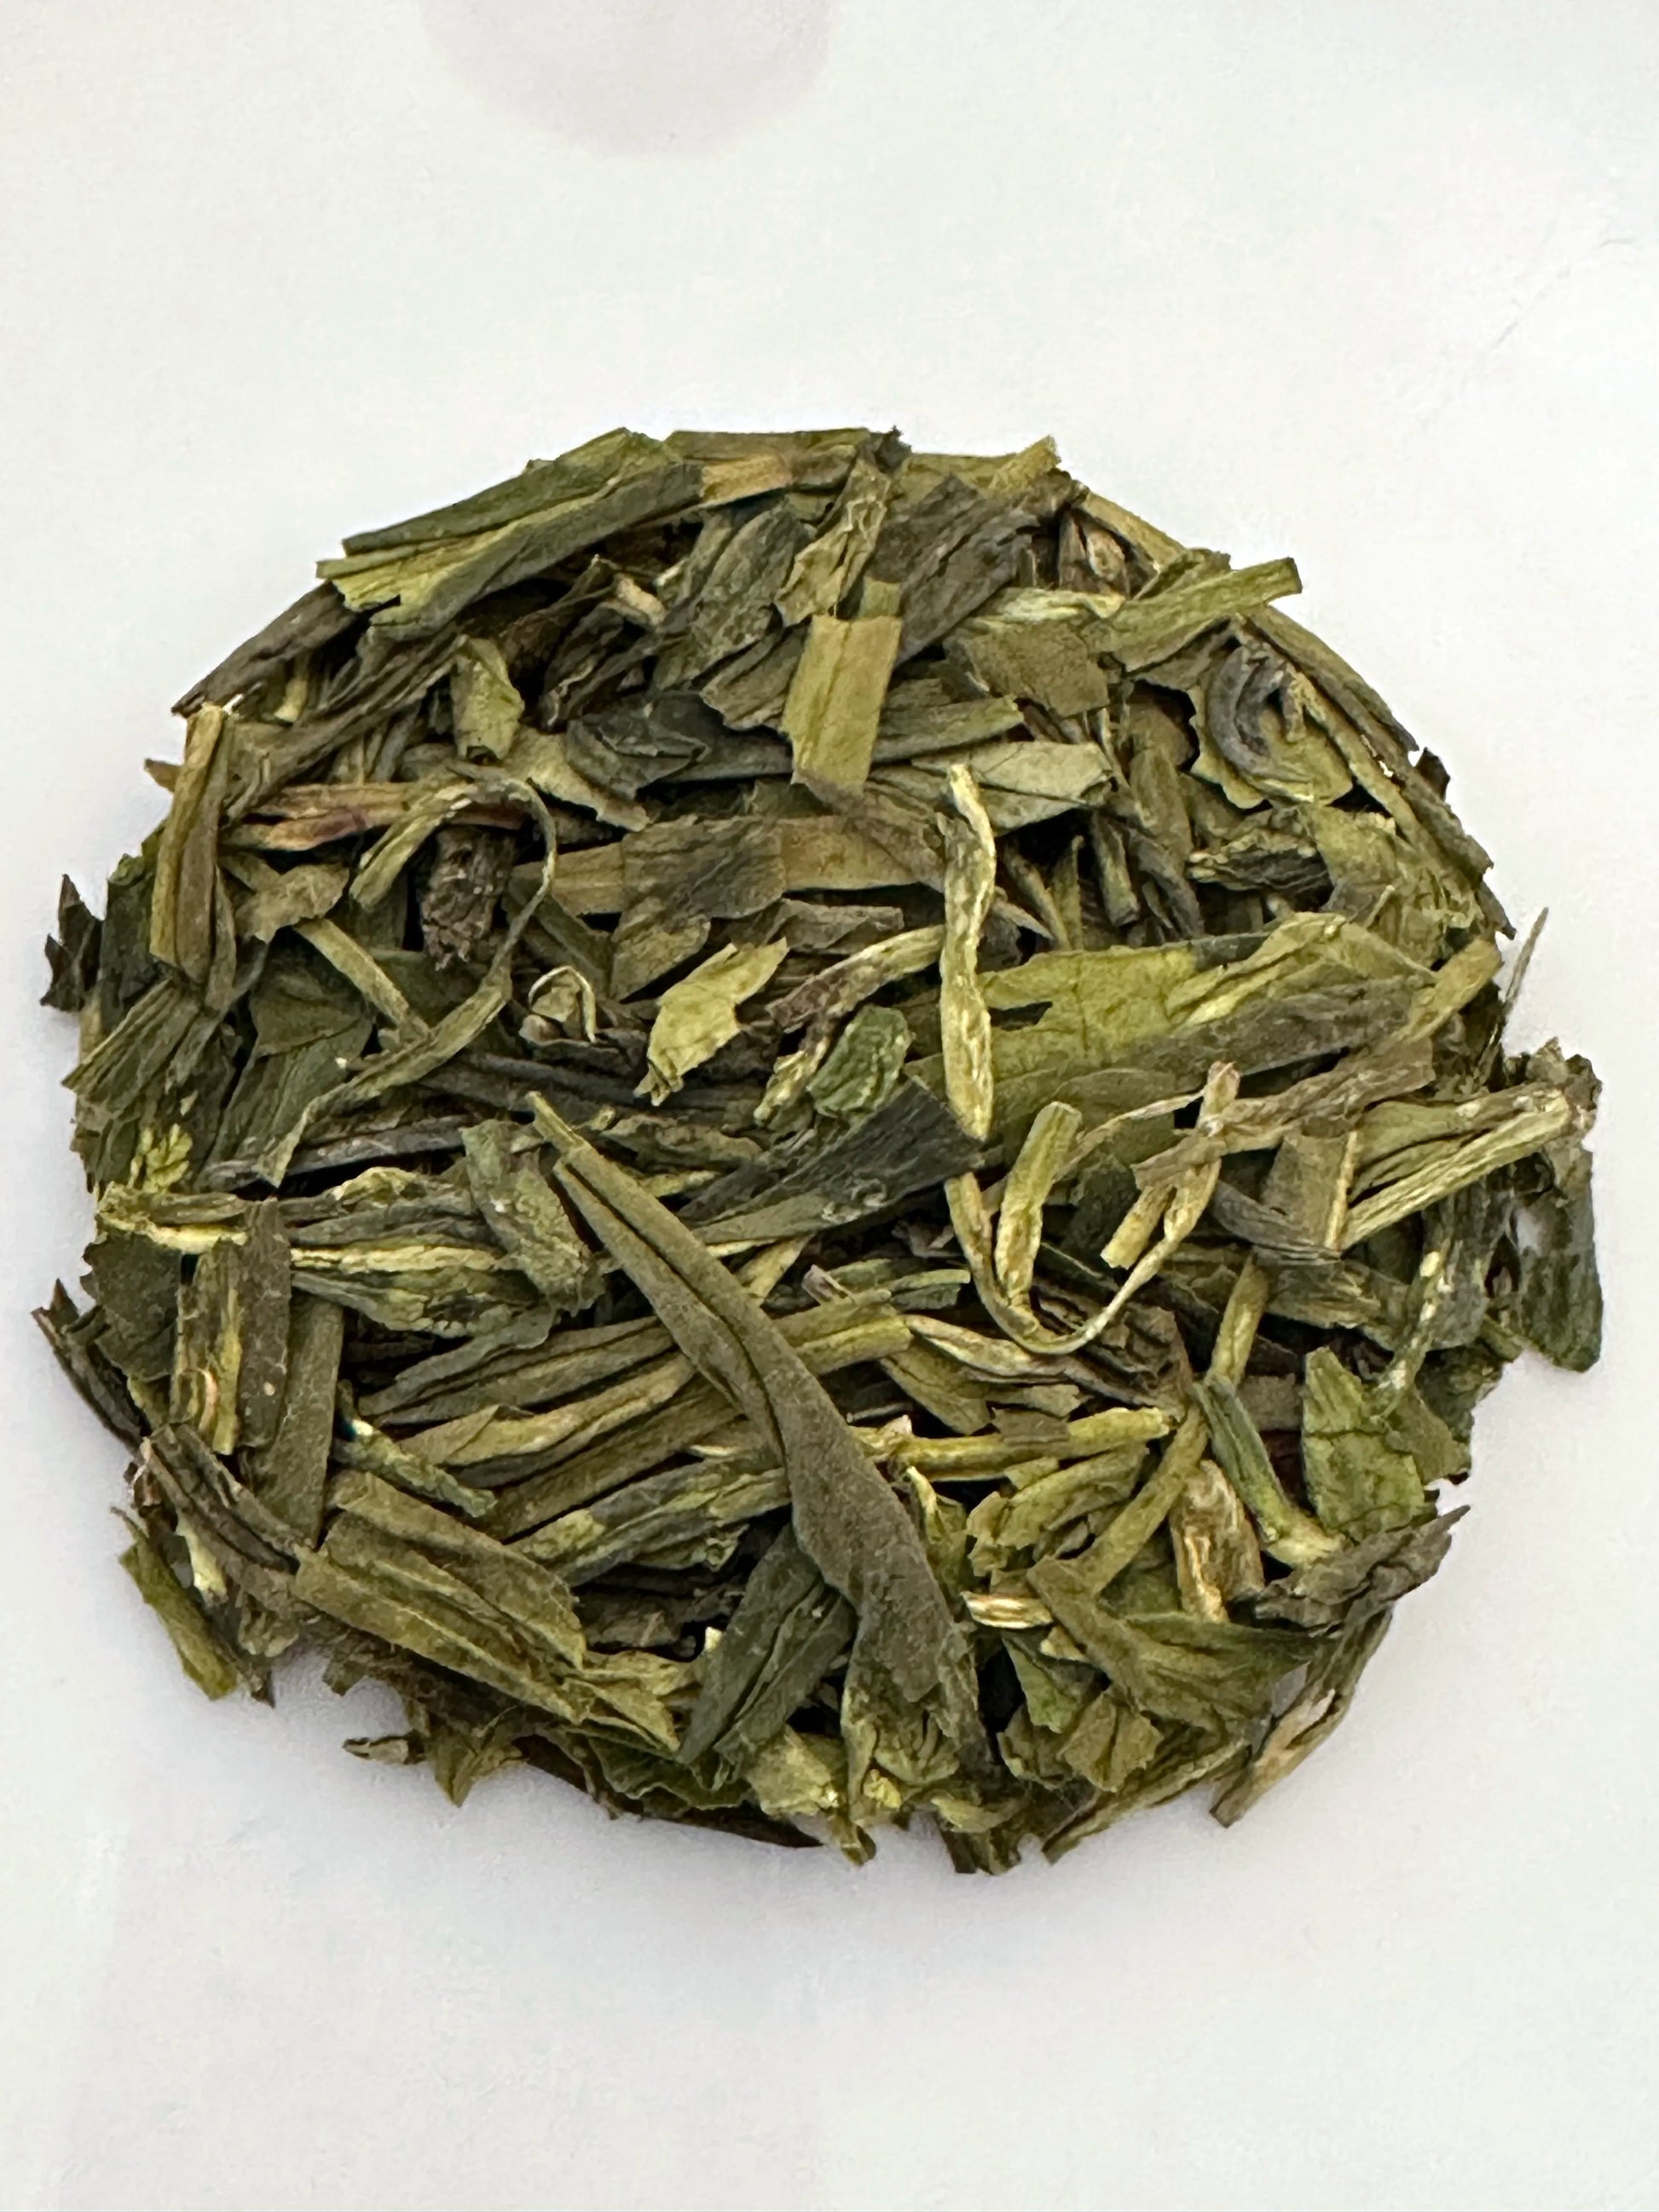 Small pile of Dragon Well #4 Green Tea